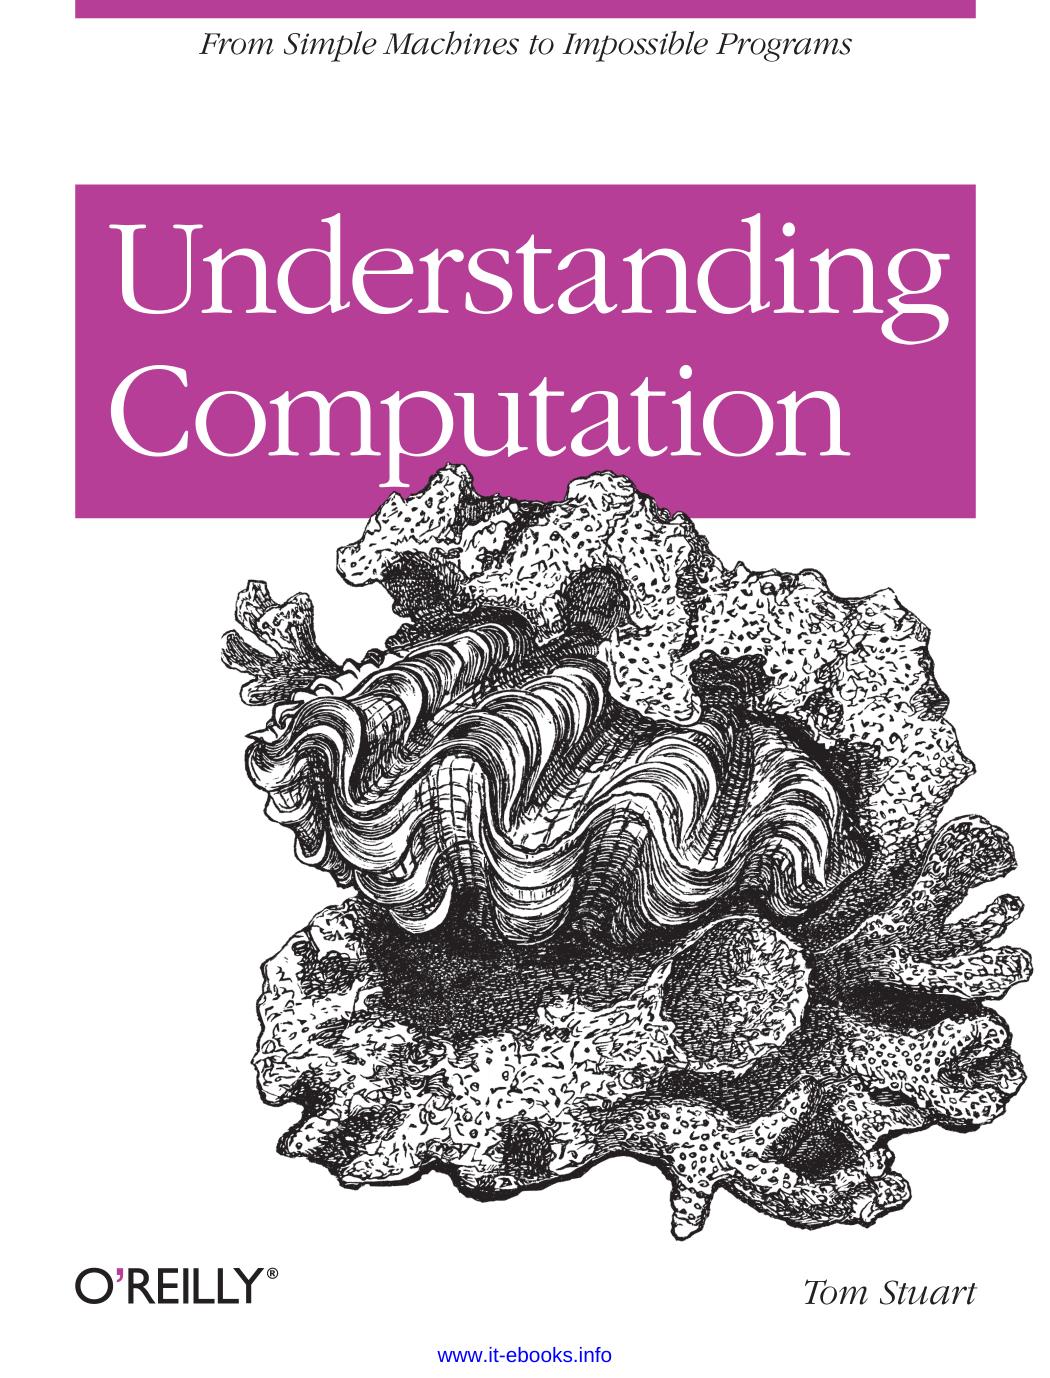 Understanding Computation by Tom Stuart